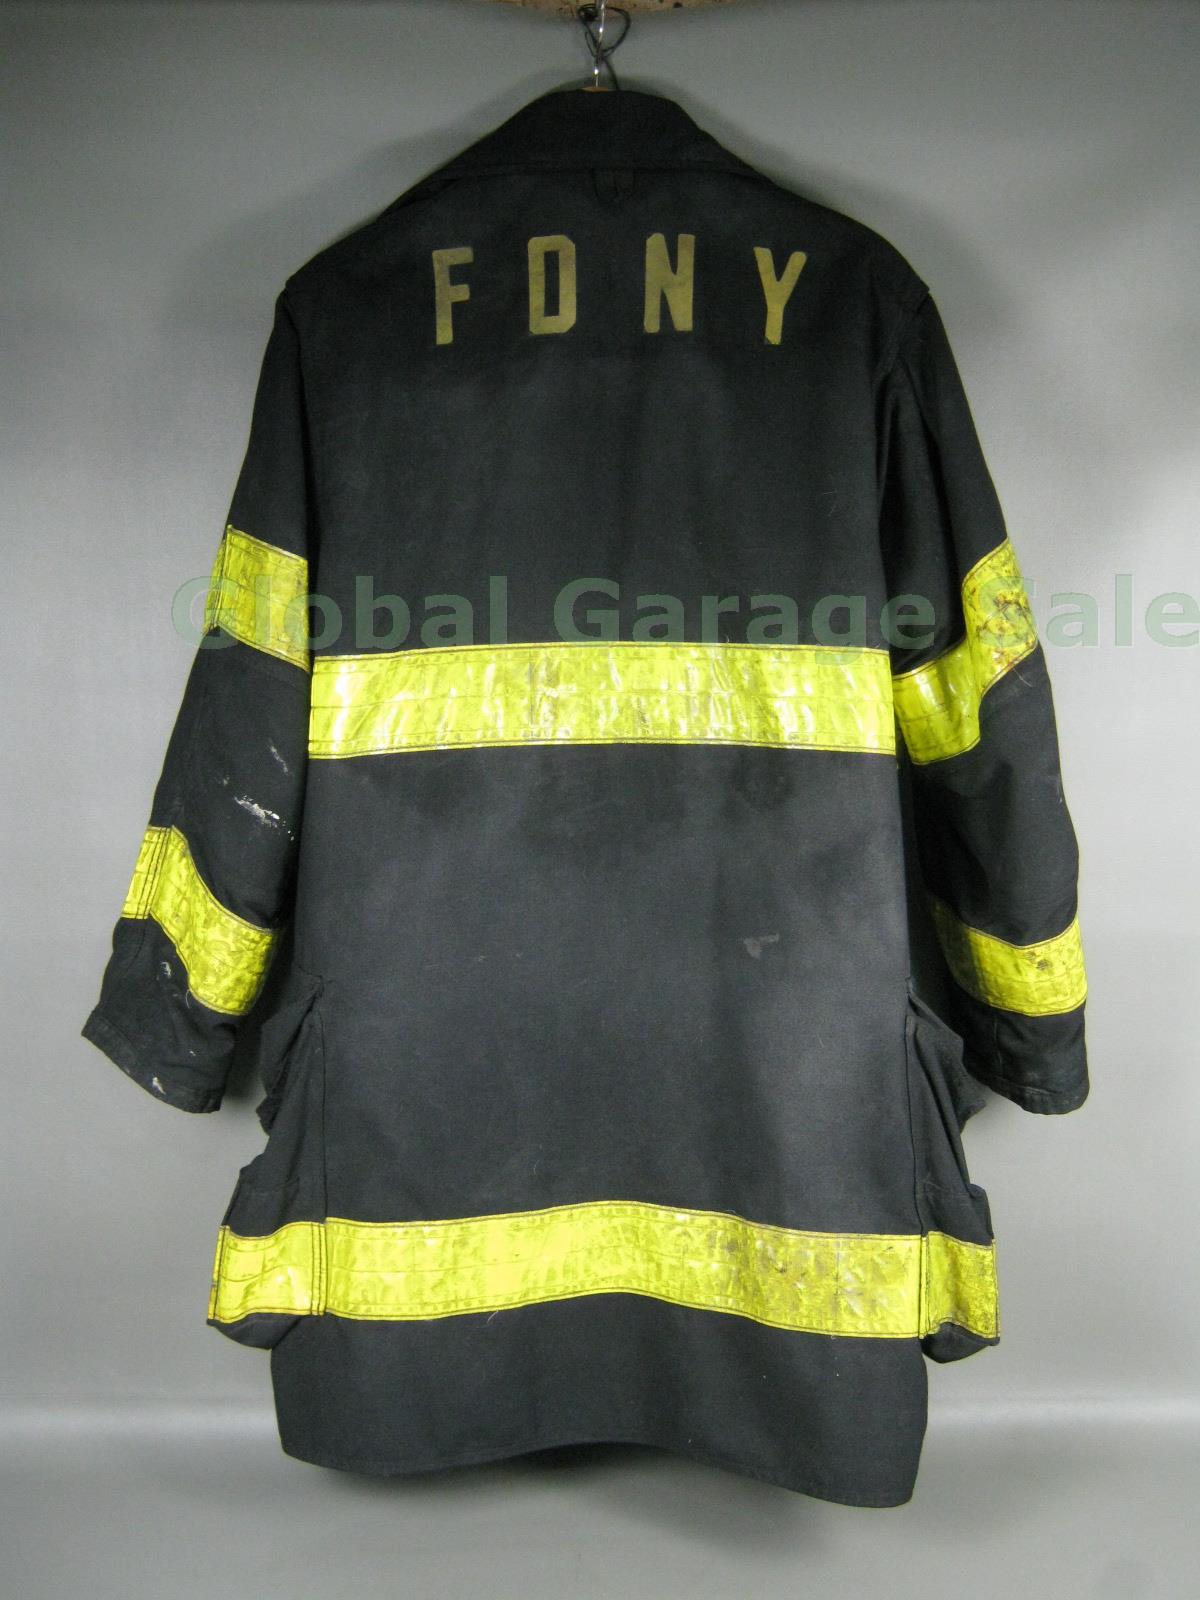 Vtg Janesville FDNY NY Fire Dept Summer Structural Firefighter Turnout Jacket NR 2